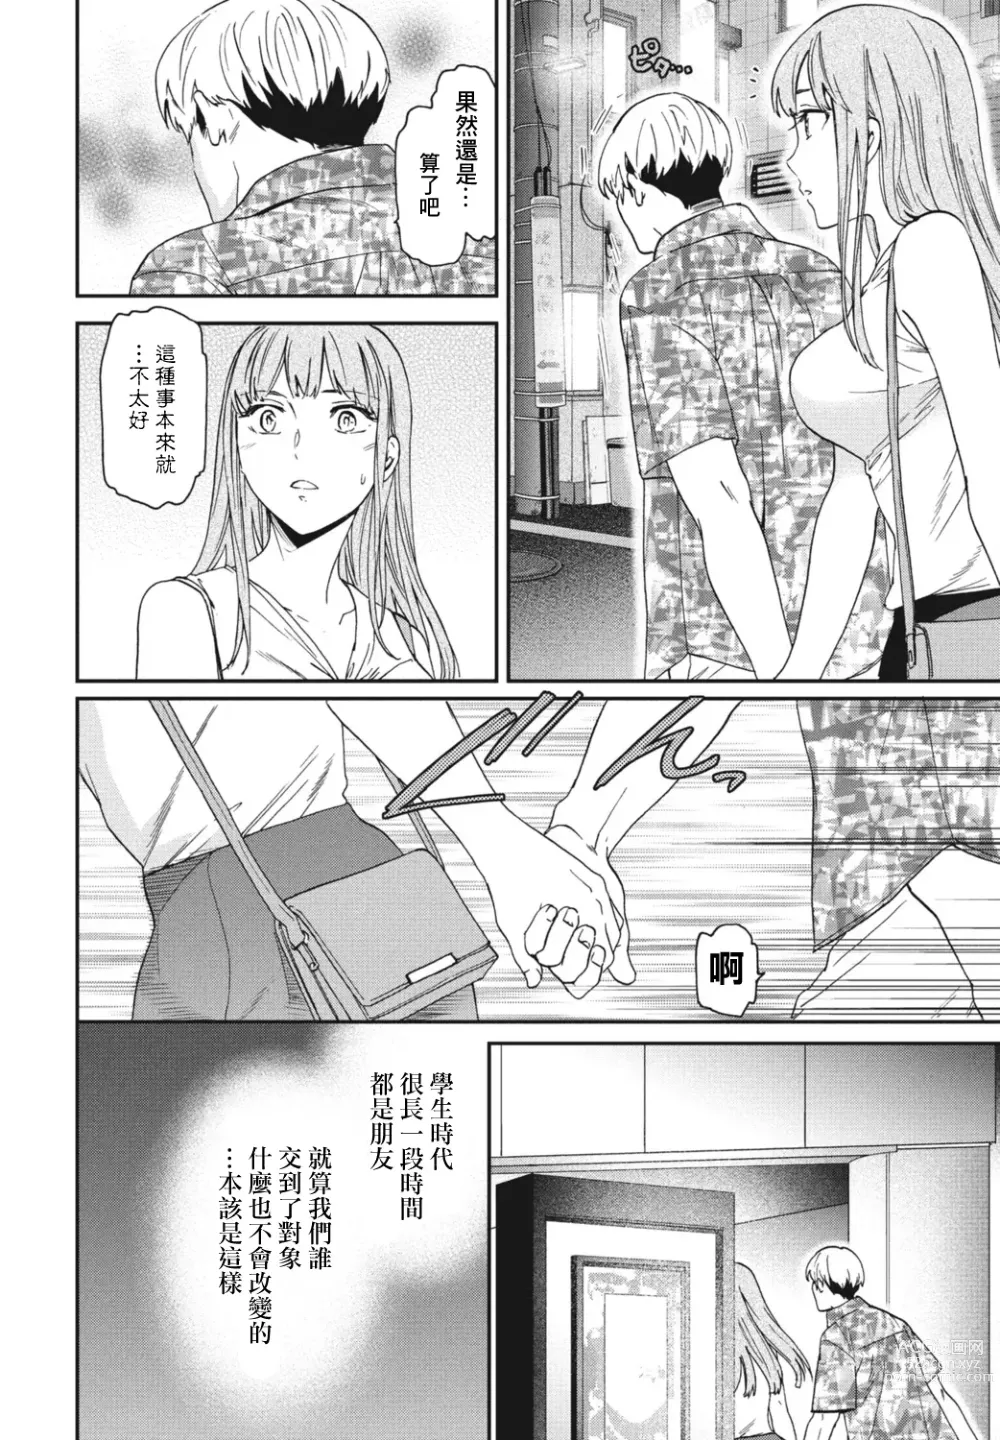 Page 2 of manga Lose